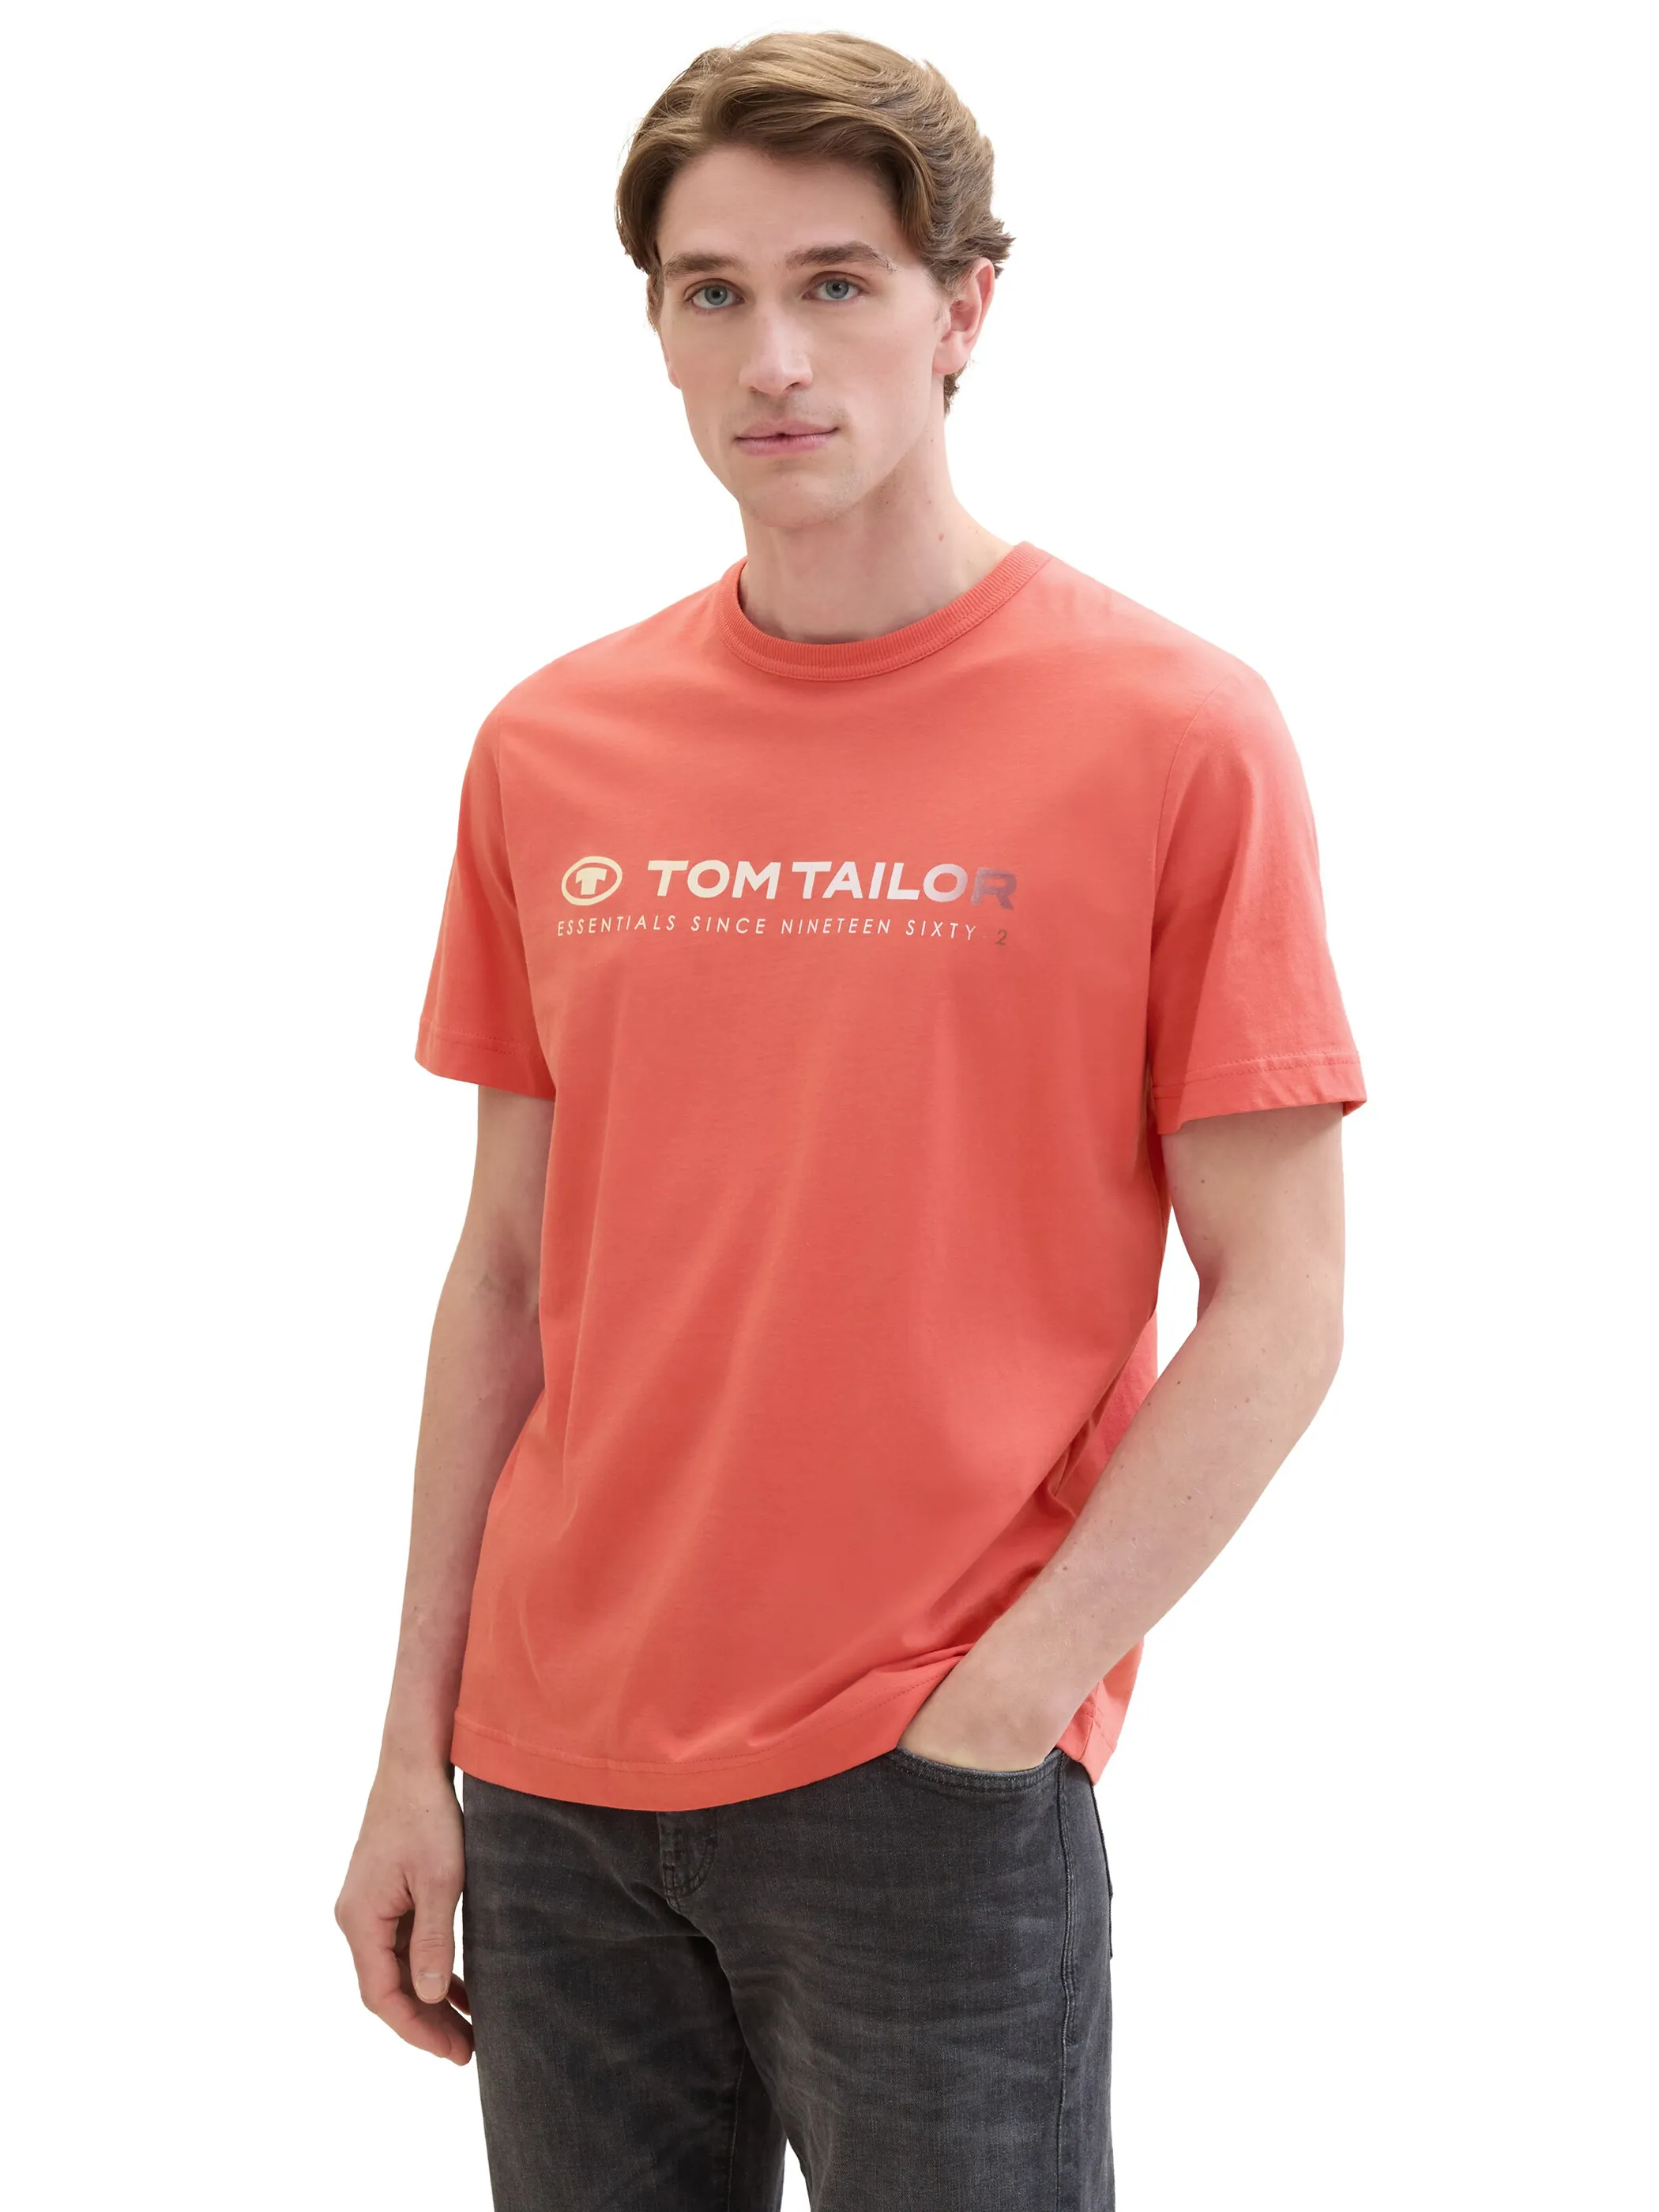 Tom Tailor 1041855 printed t-shirt Pink 895629 26202 3